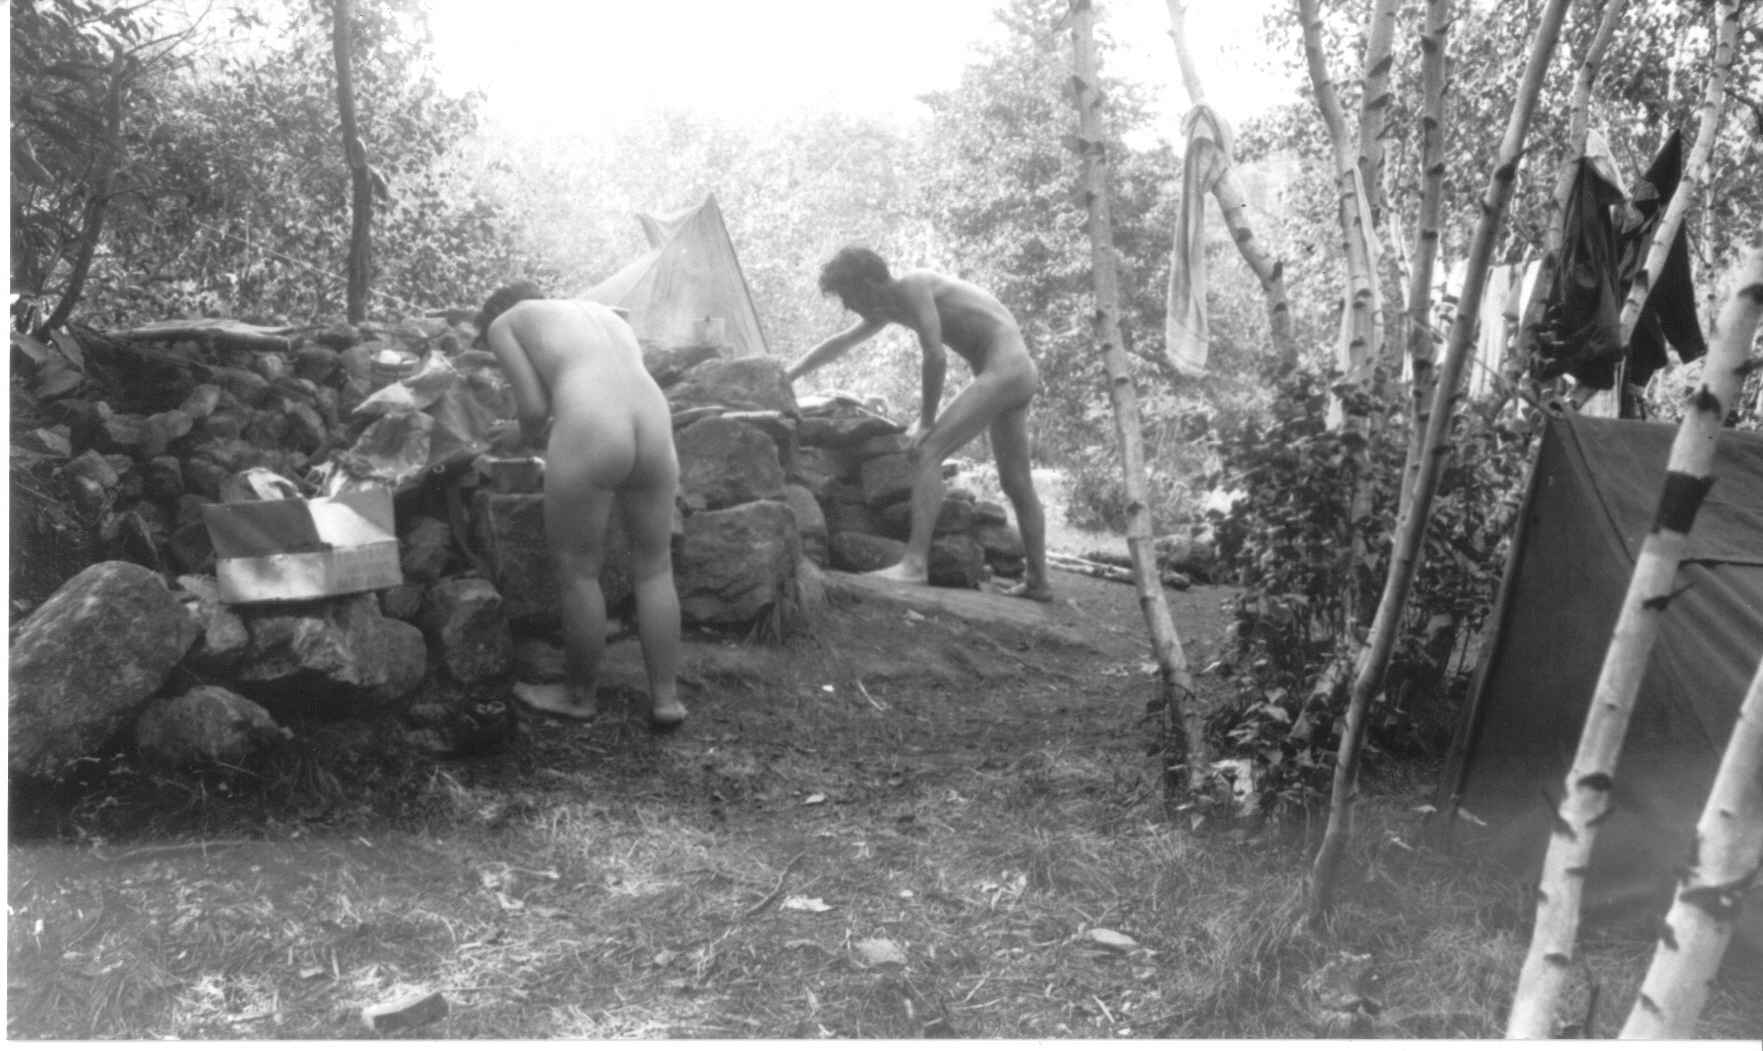 The farm nudist camp